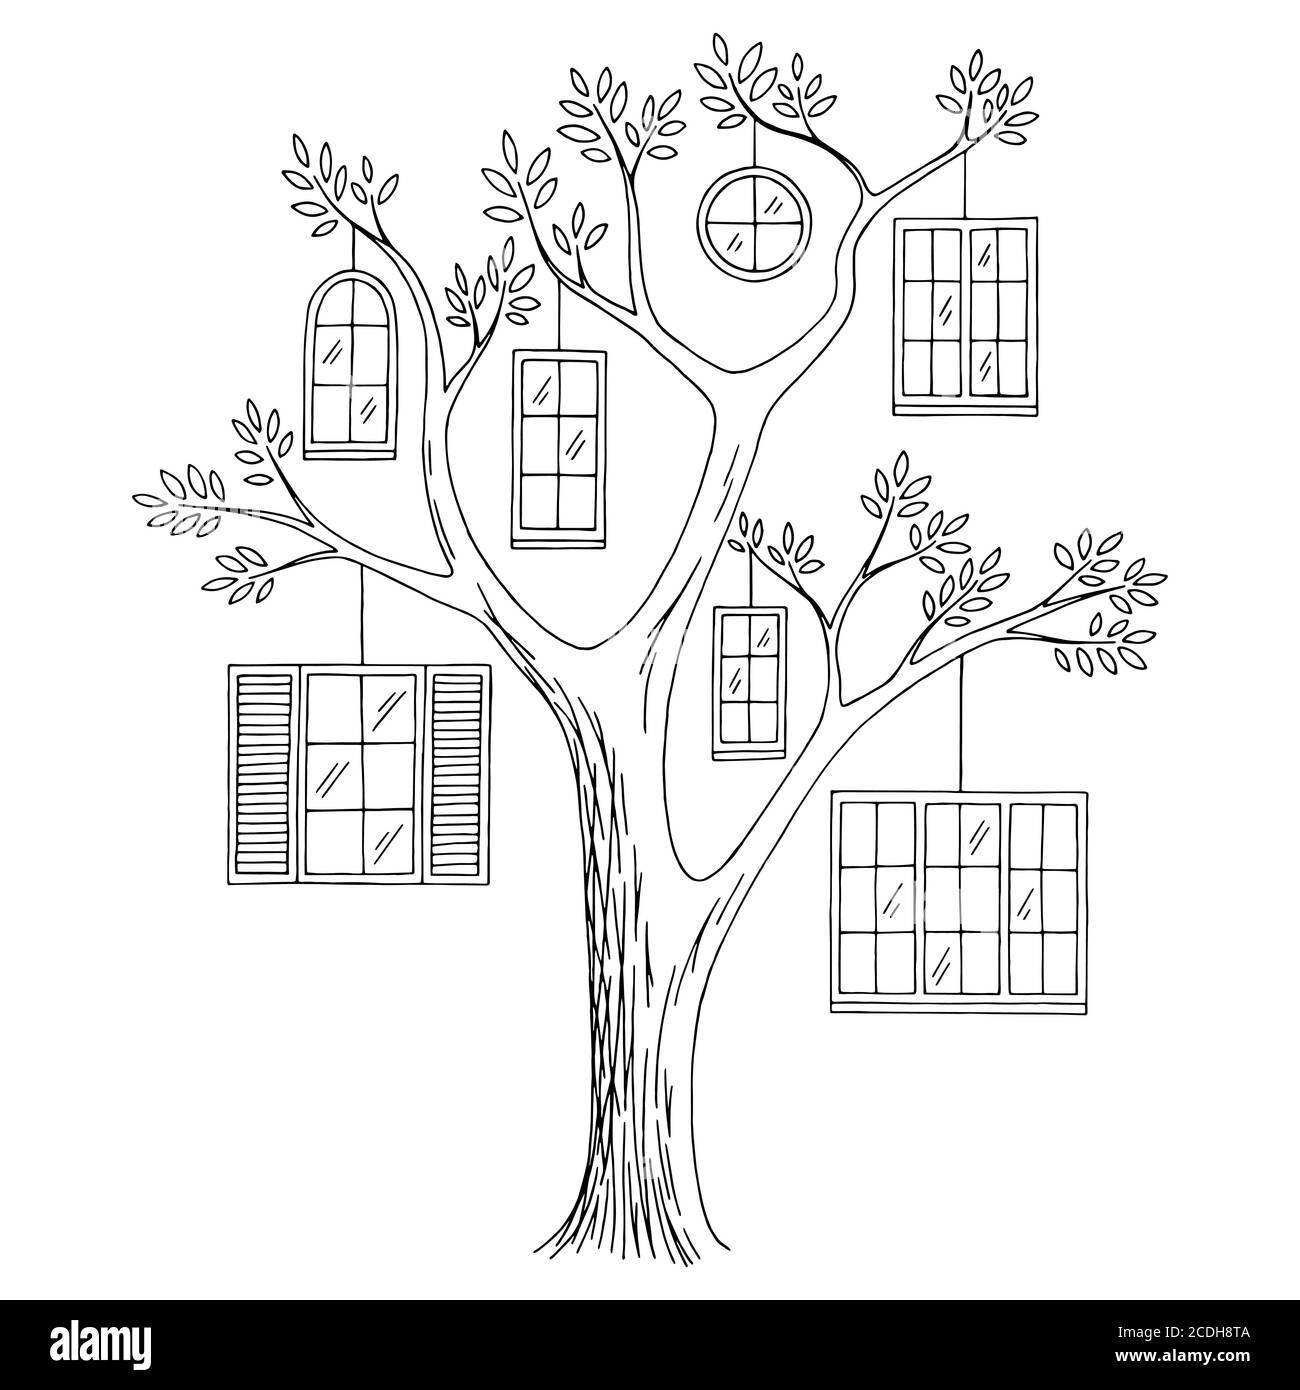 Fenster Baum Grafik schwarz weiß abstrakt Doodle Skizze Illustration Vektor Stock Vektor